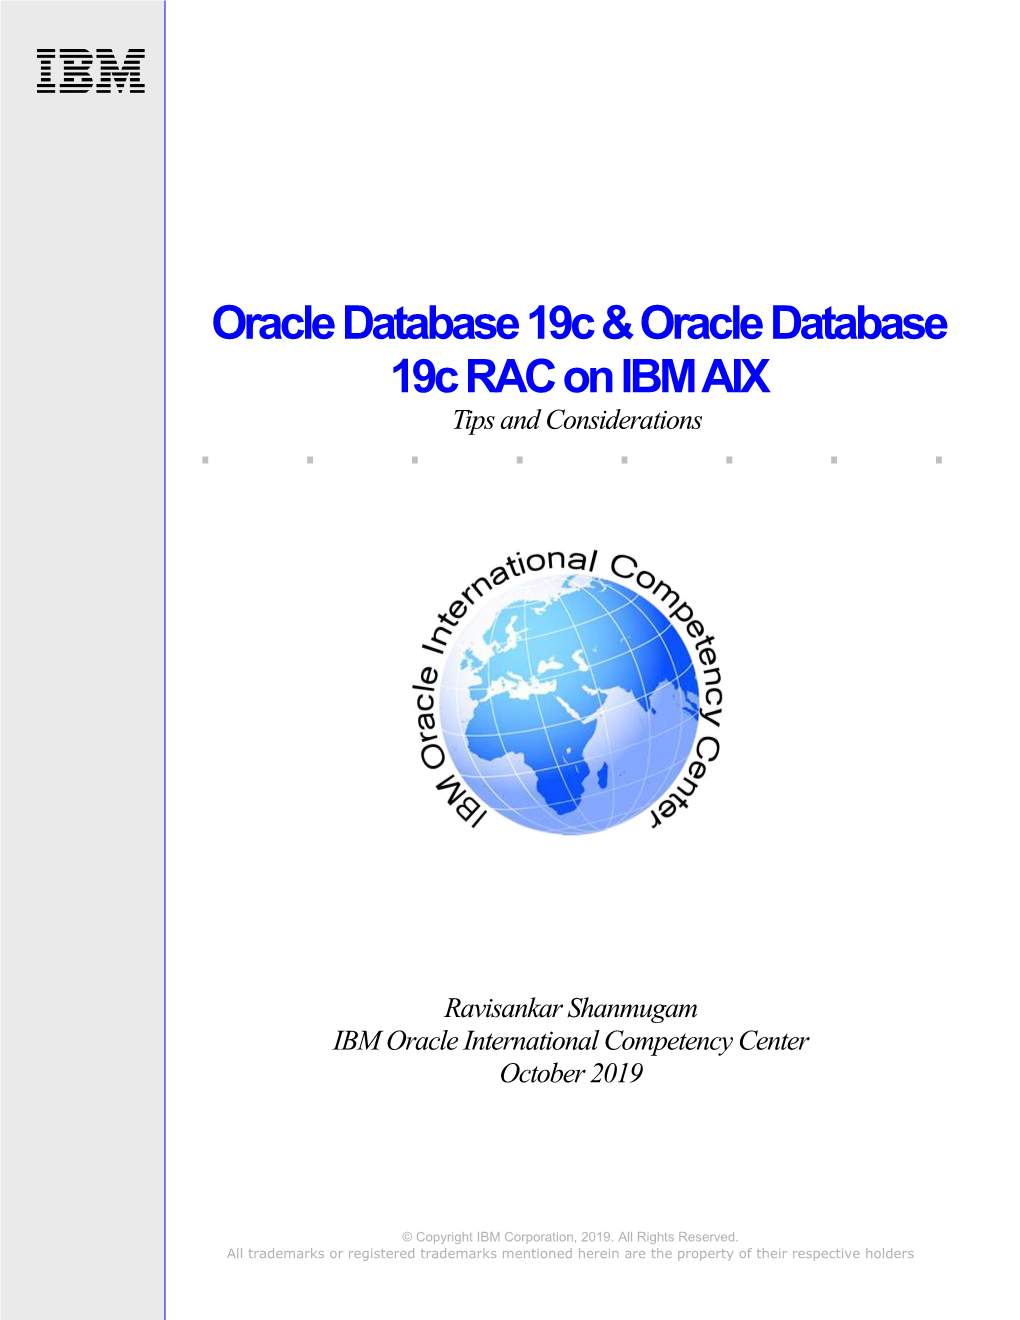 Oracle Database 19C & Oracle Database 19C RAC on IBM